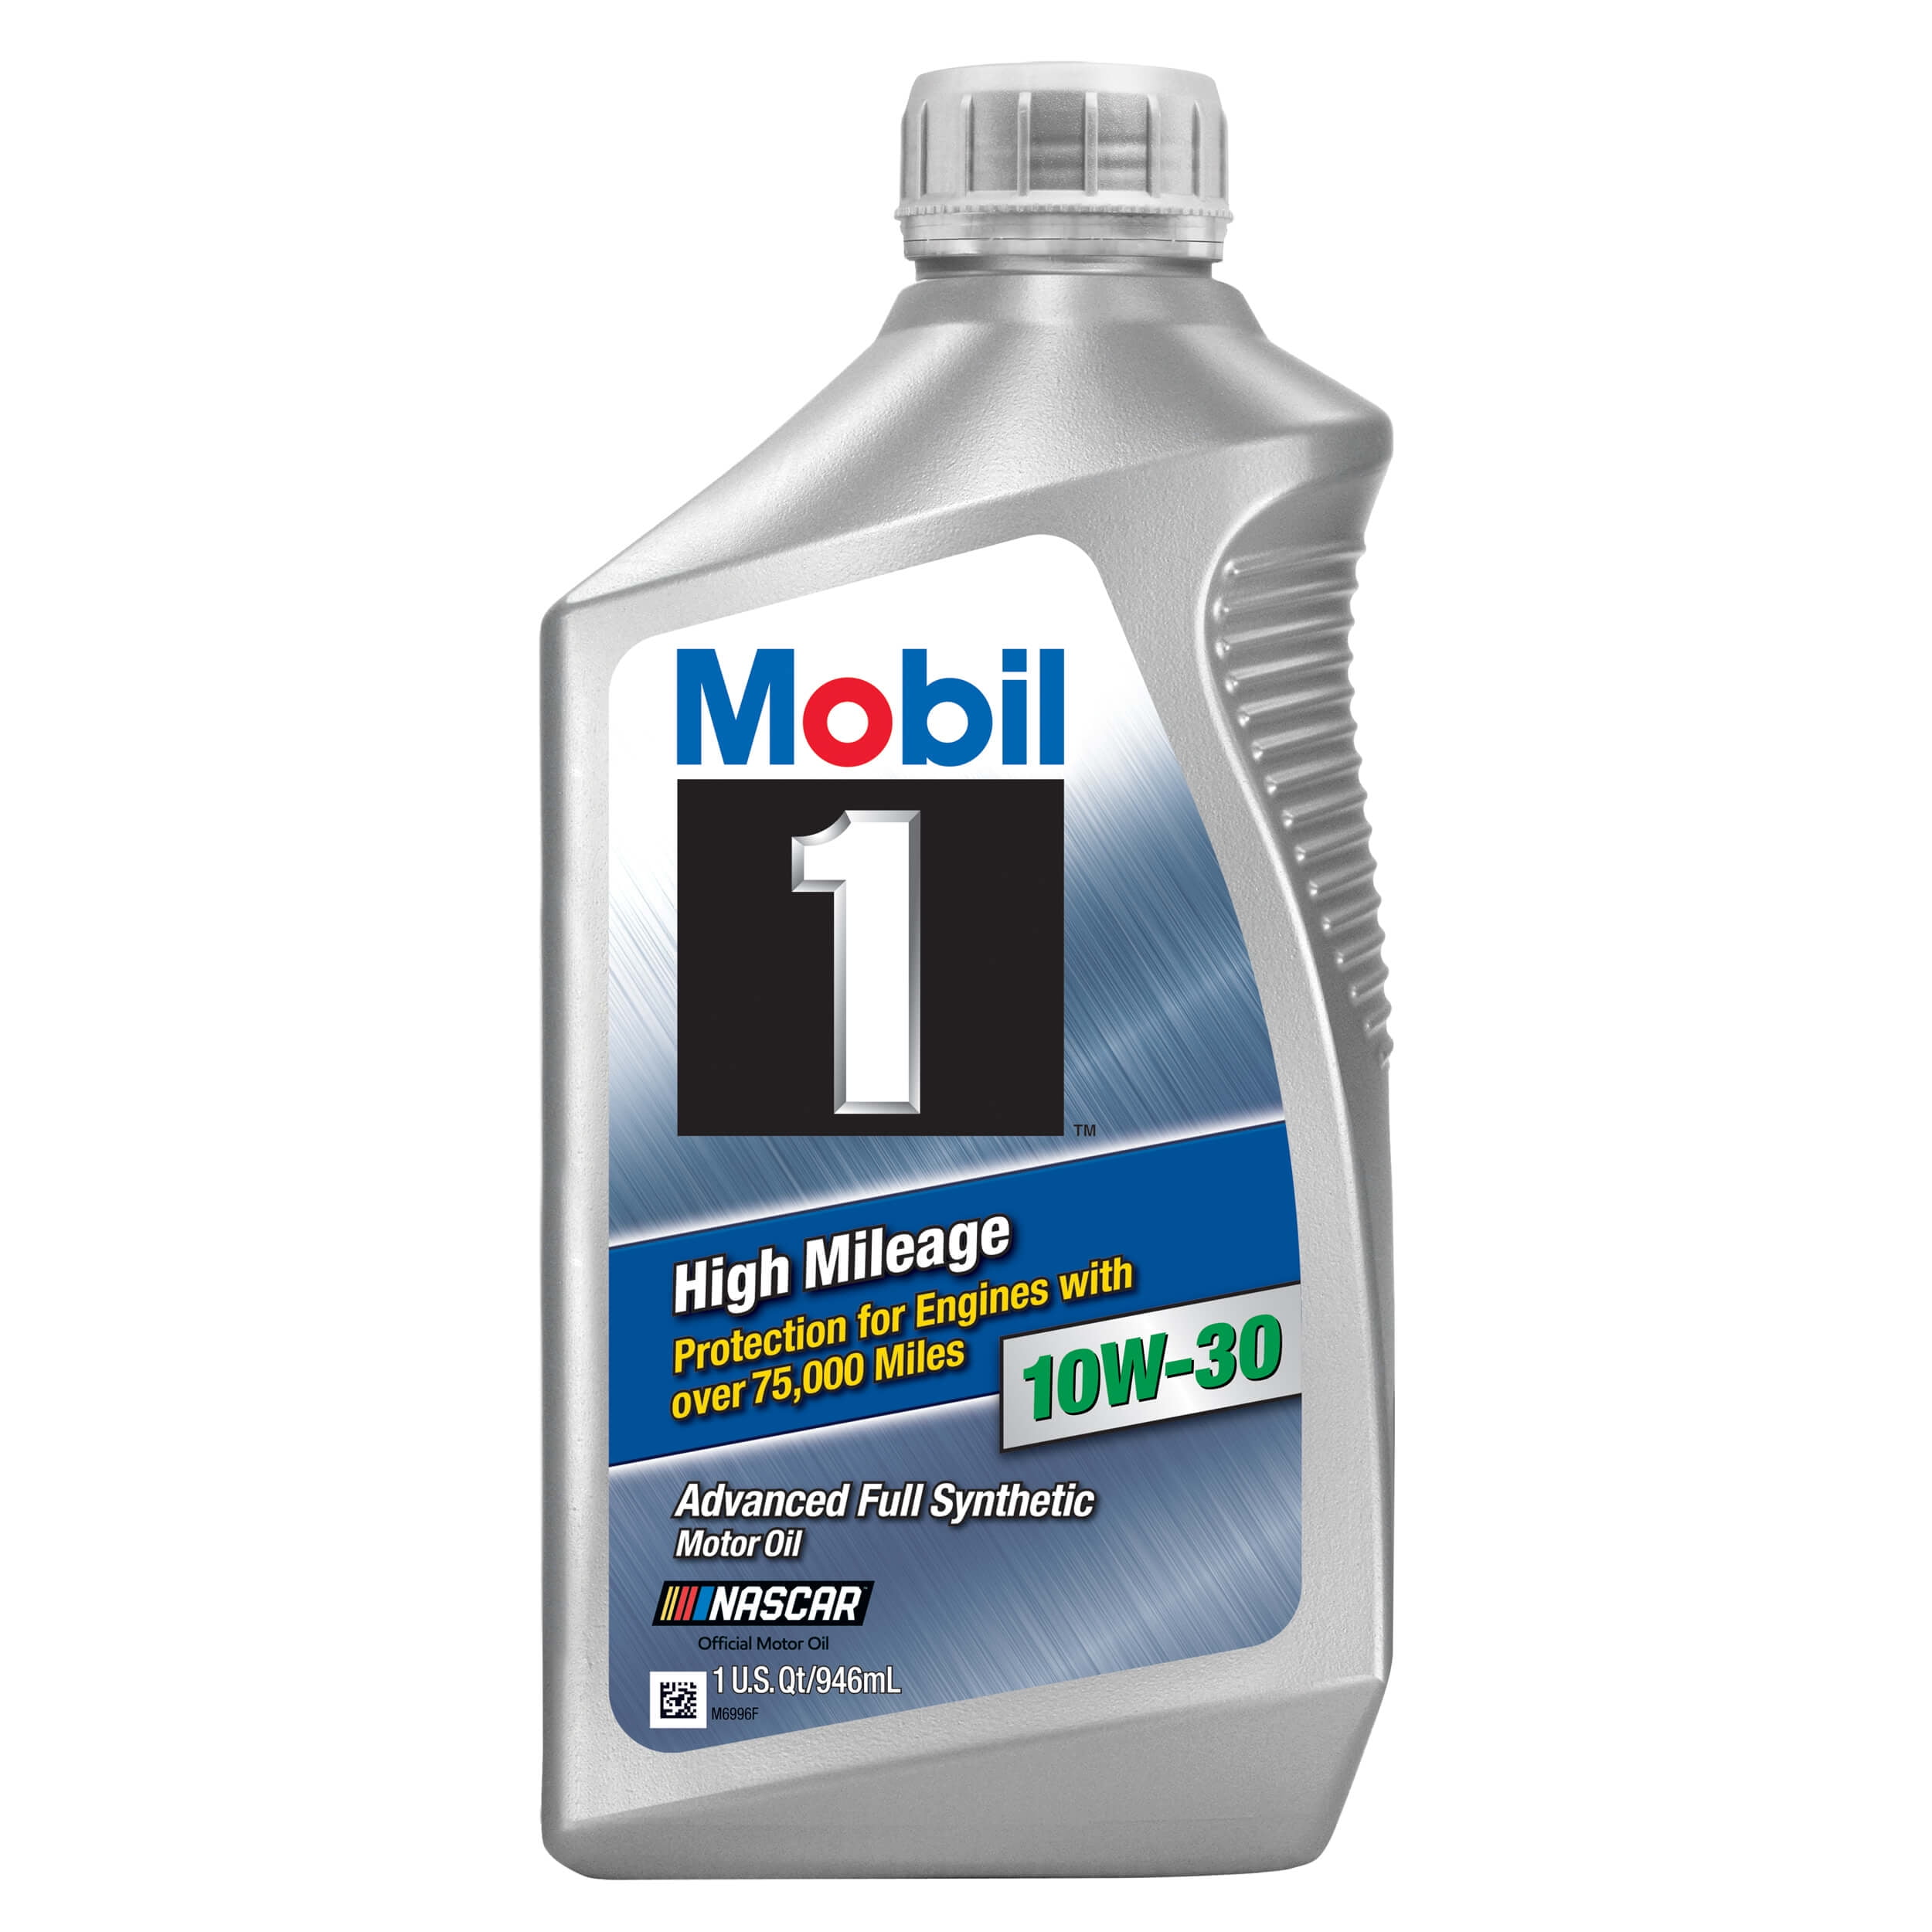 mobil-1-high-mileage-full-synthetic-motor-oil-10w-30-1-qt-walmart